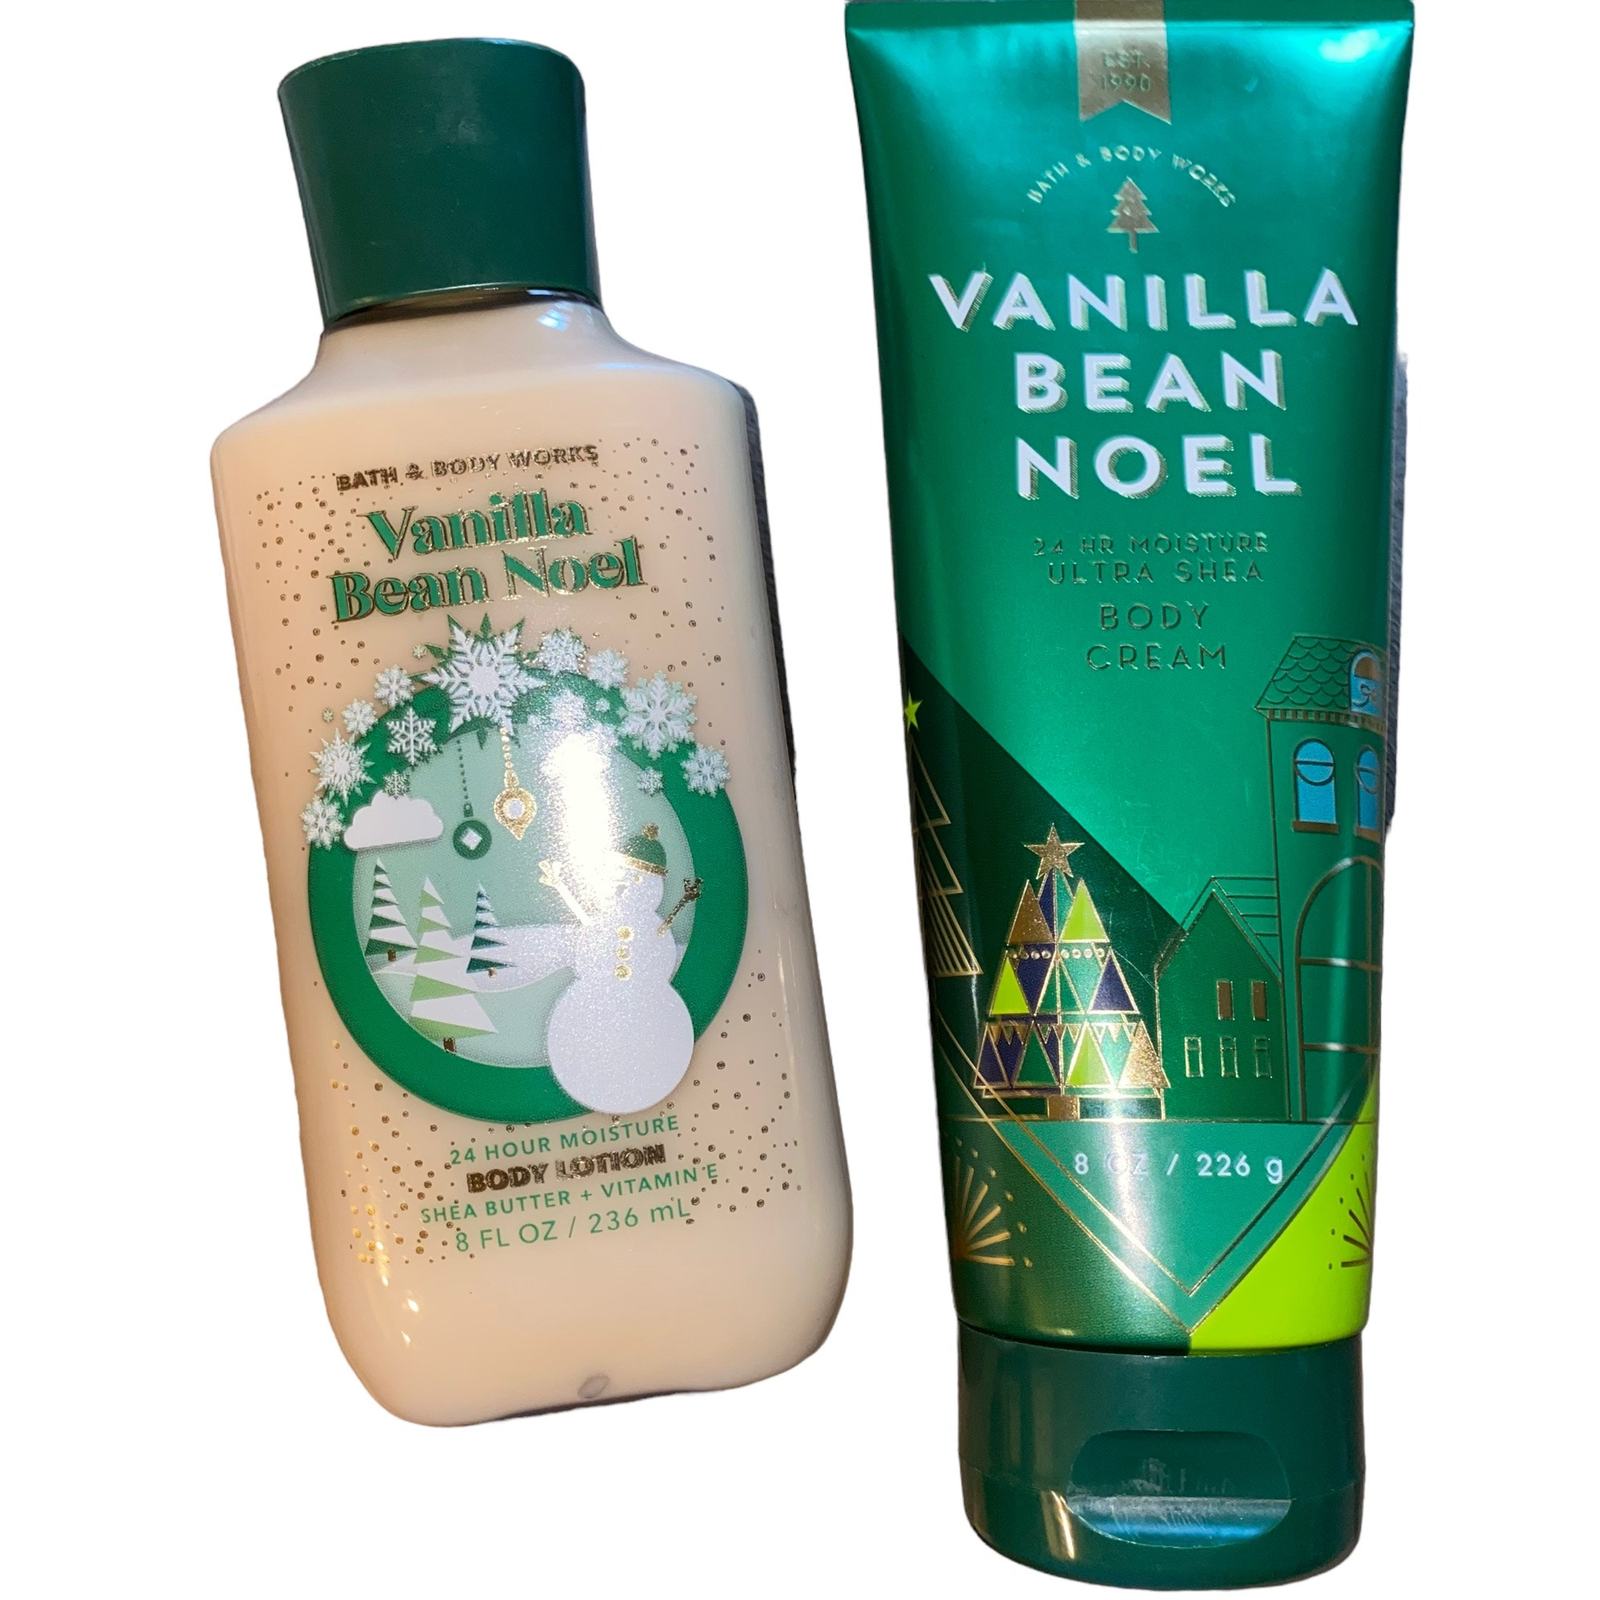 Bath and Body Works Vanilla Bean Noel Body Cream and Lotion 8oz each NEW - $27.65